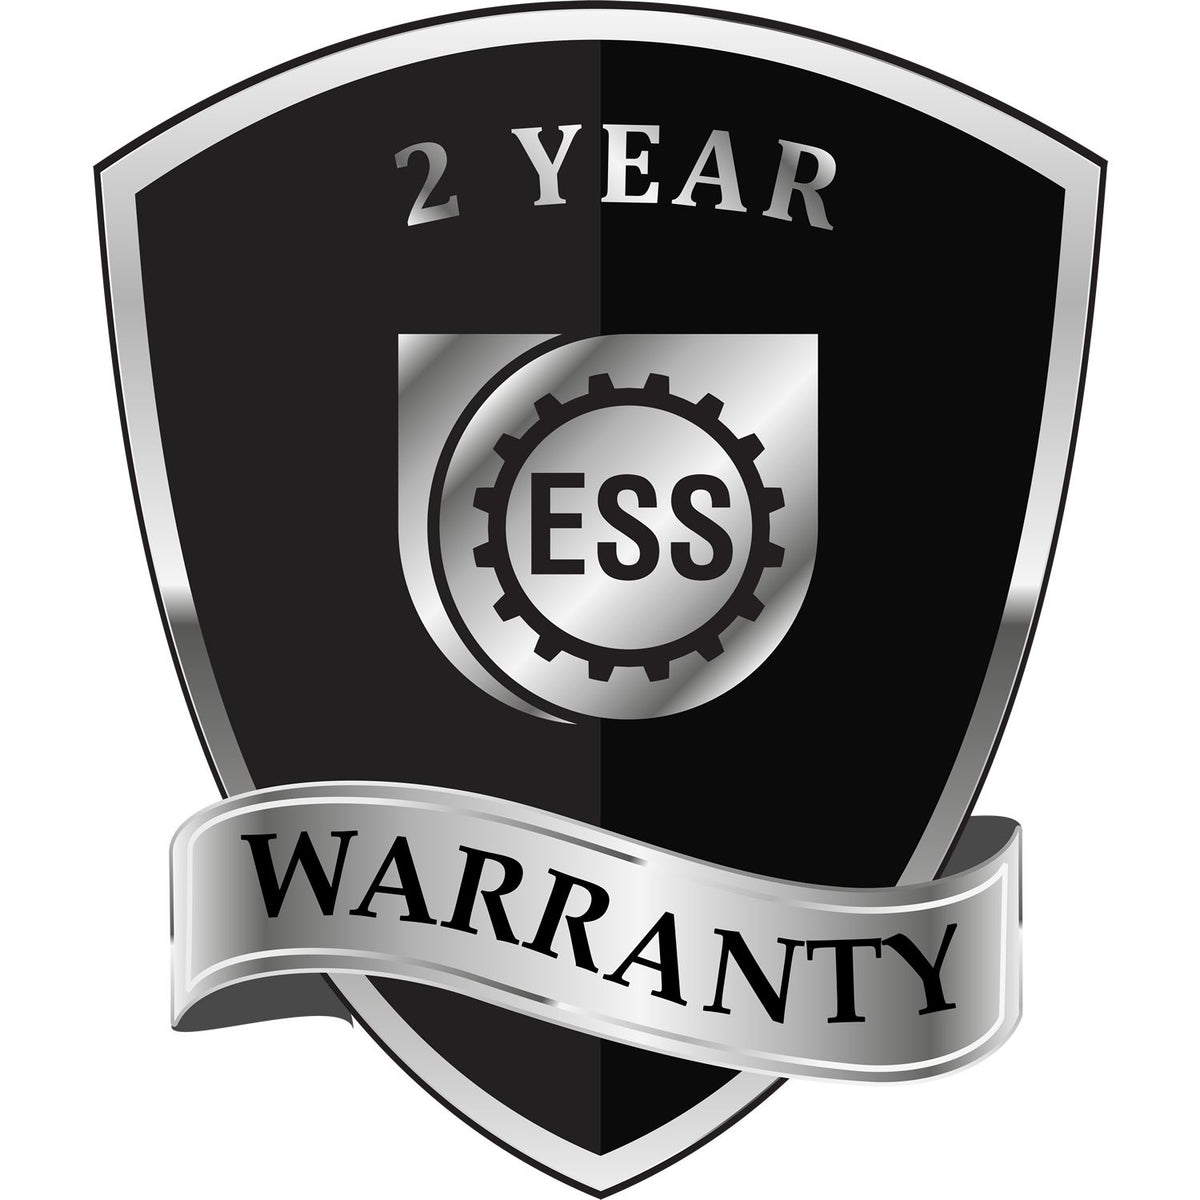 A black and silver badge or emblem showing warranty information for the Hybrid North Dakota Engineer Seal